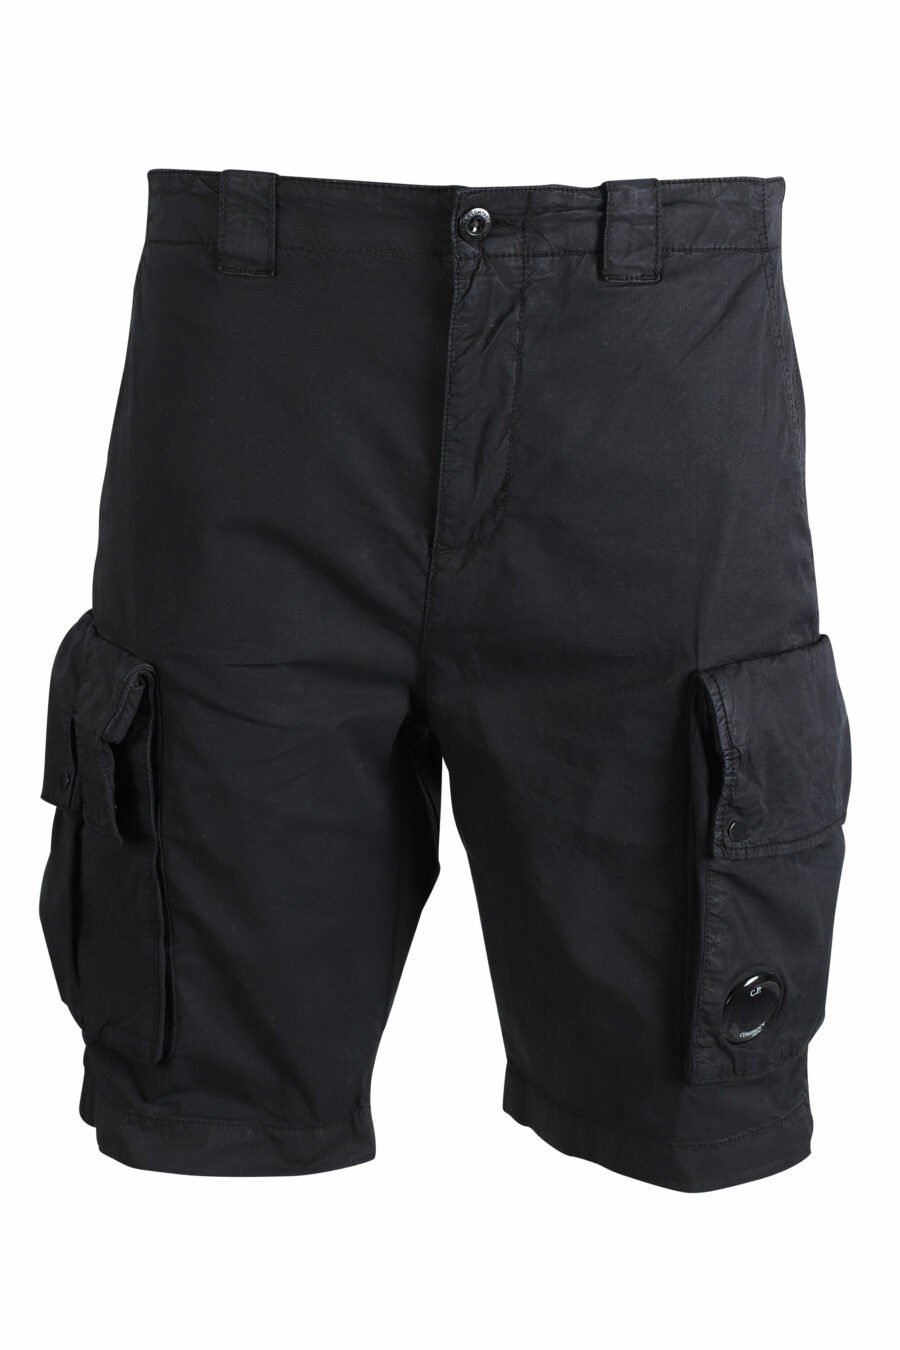 Black shorts with side pockets and circular mini logo - IMG 9478